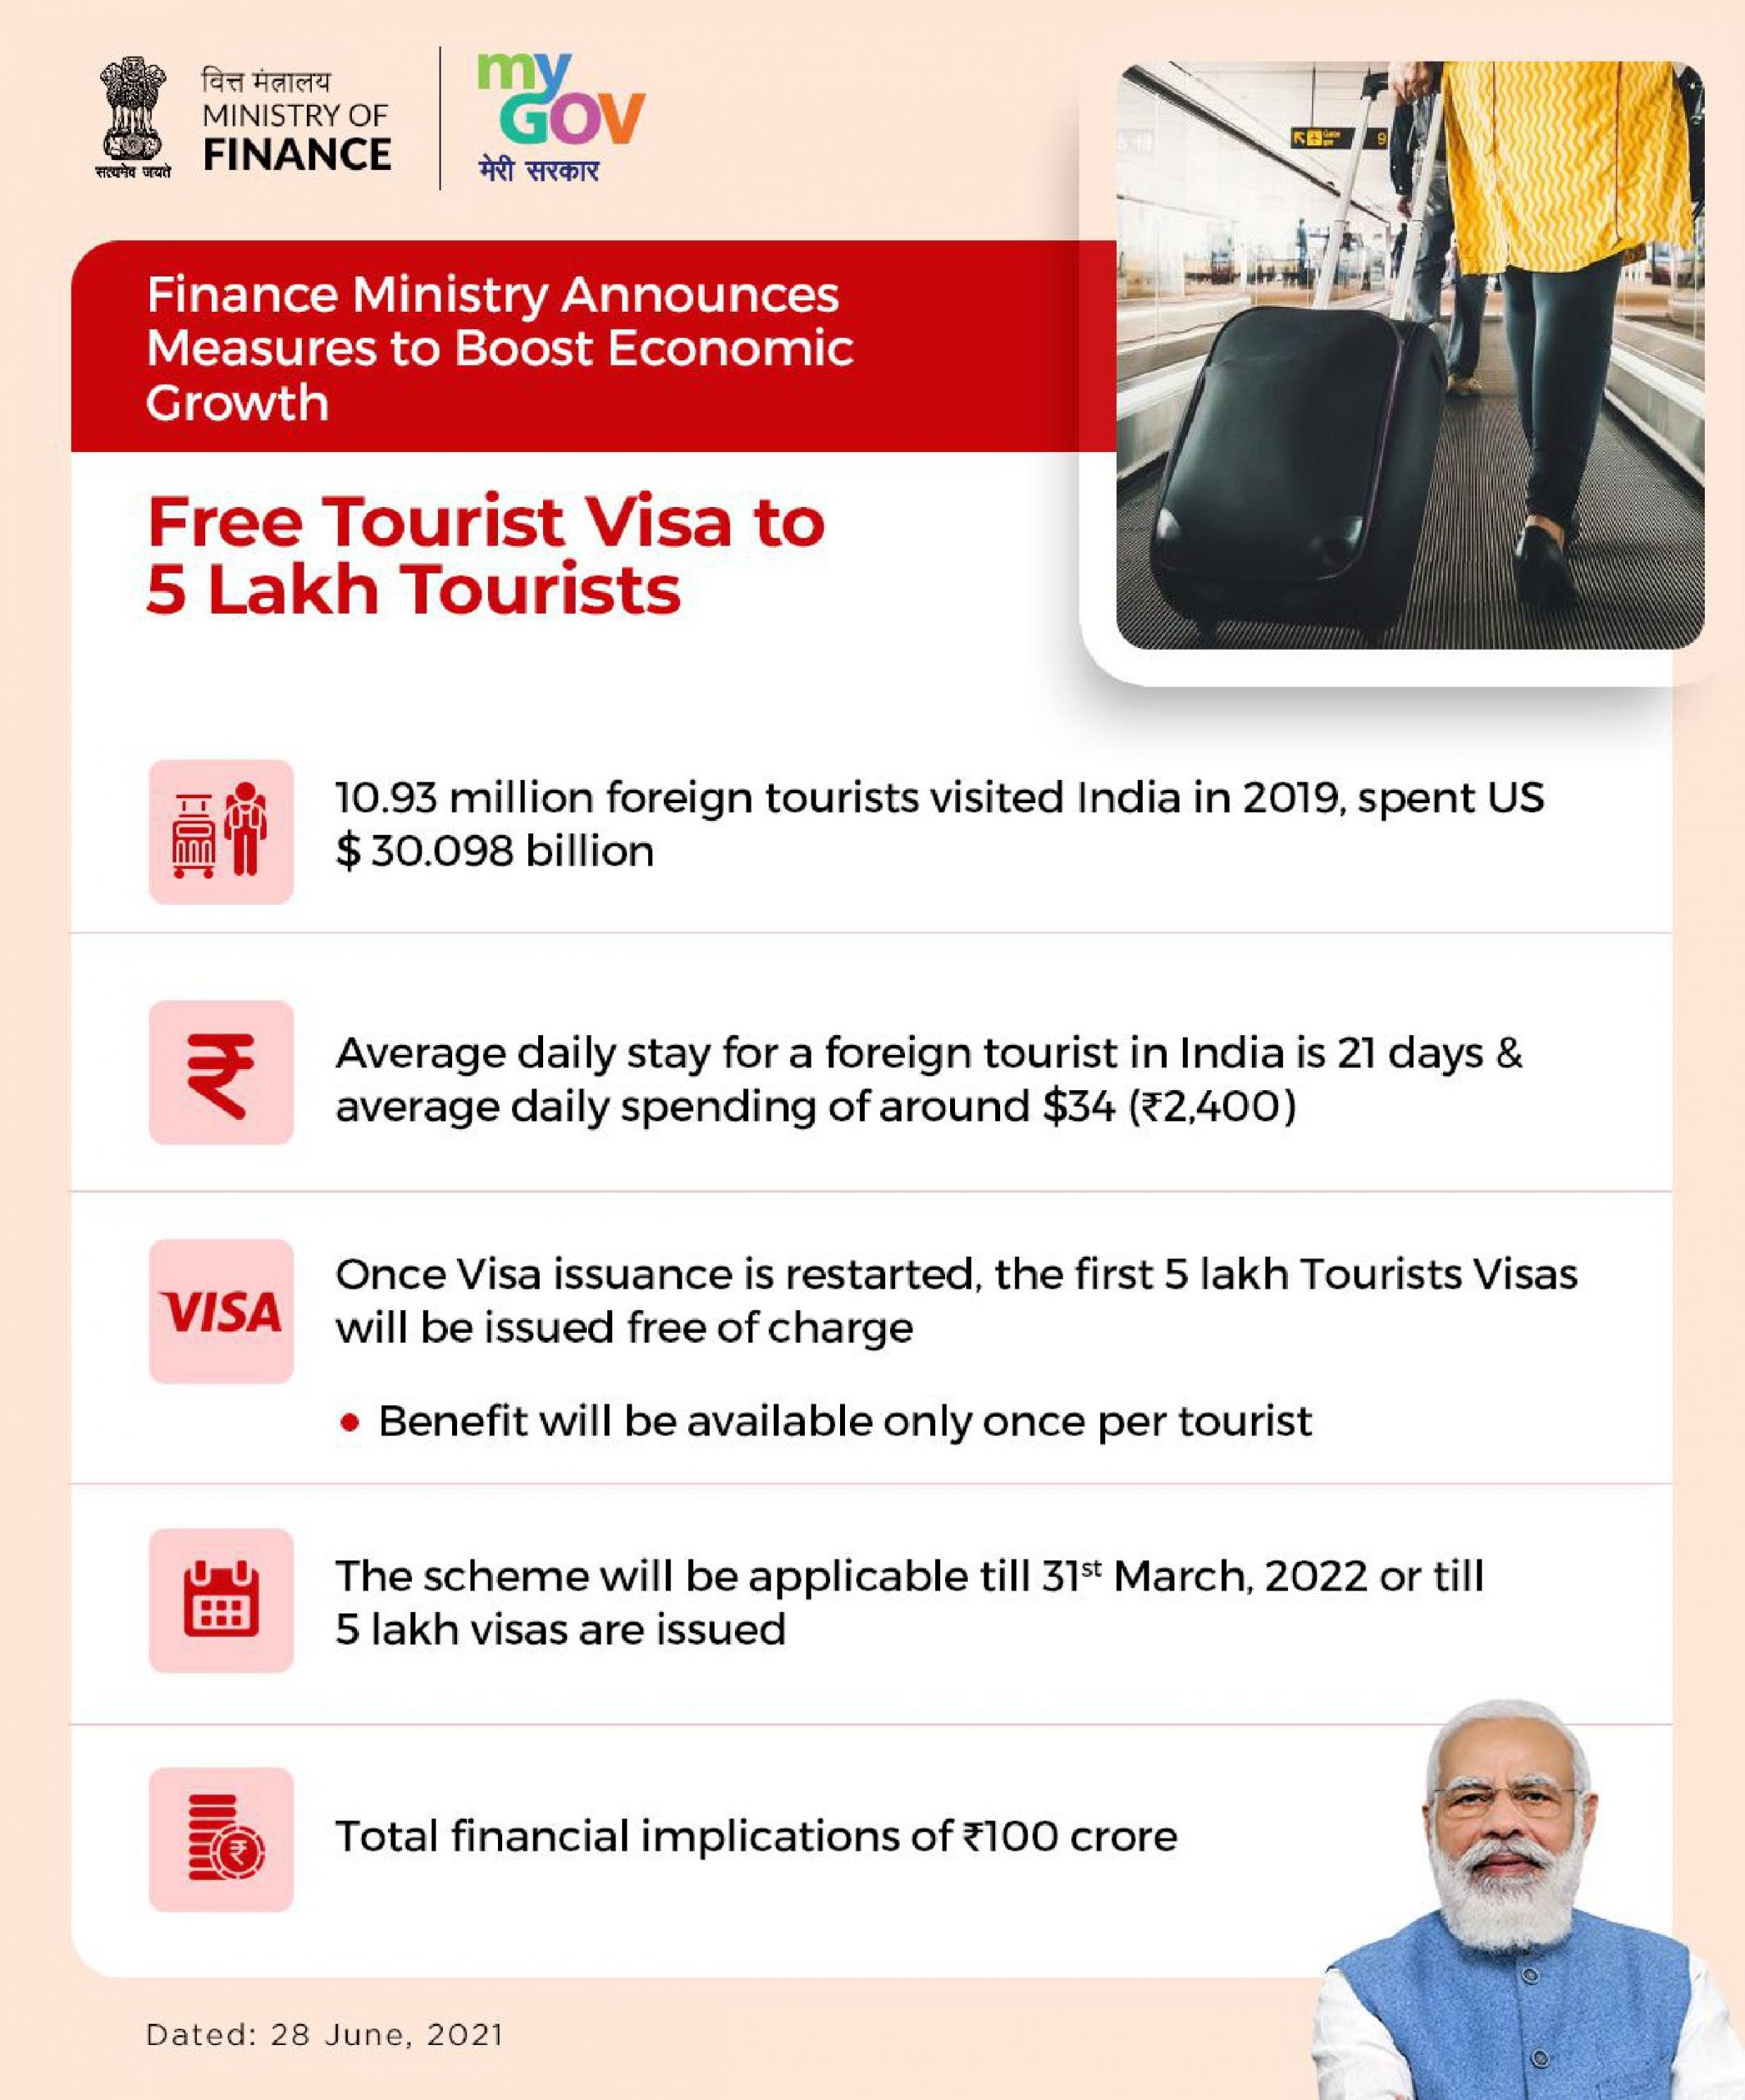 Free Tourist Visa to 5 Lakh Tourists